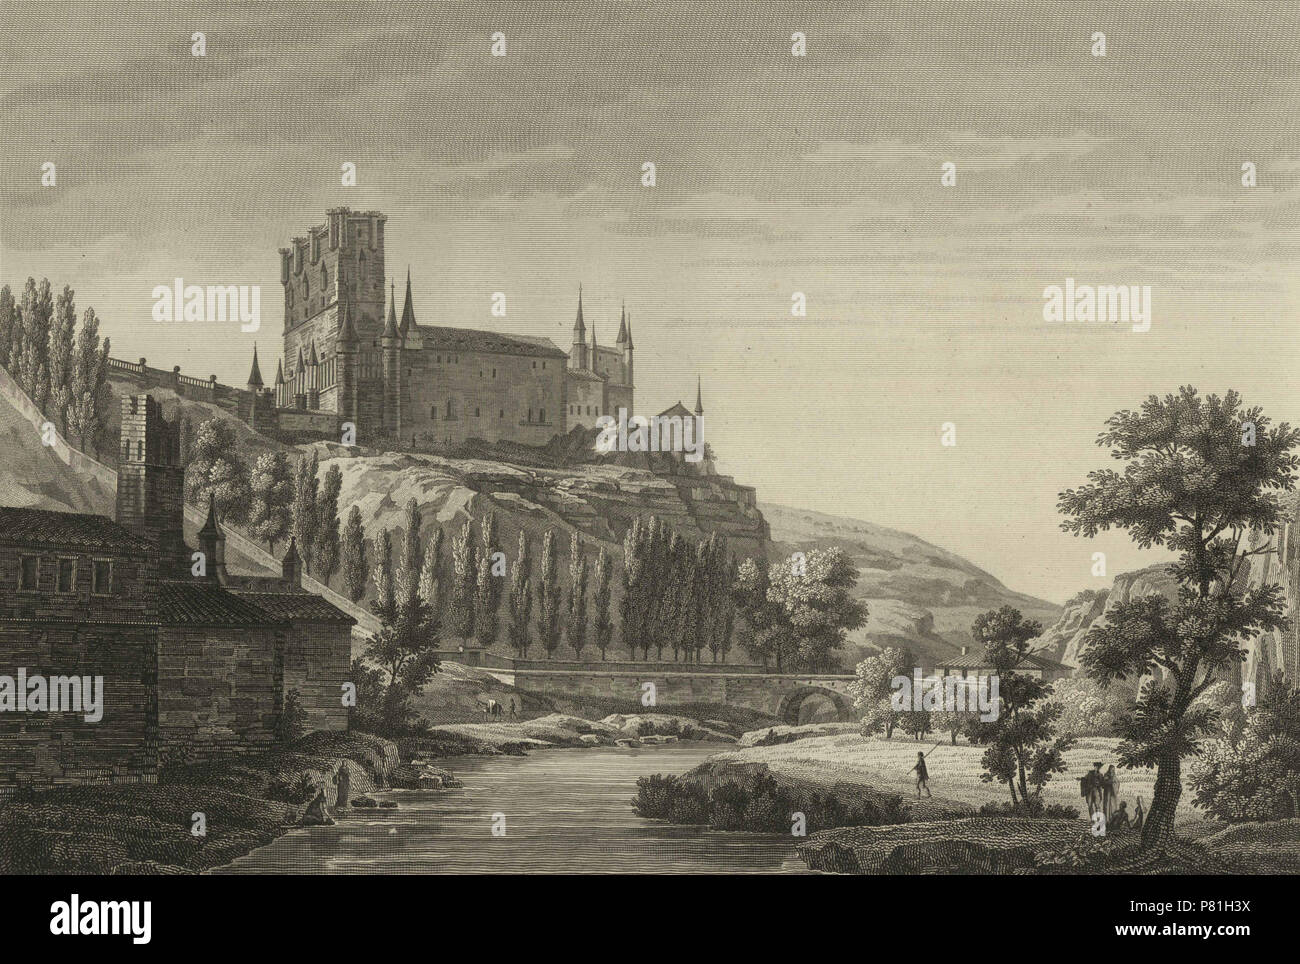 3 1806-1820, Voyage pittoresque et historique de l'Espagne, tomo II, Vista del alcázar de Segovia (cropped) Stock Photo